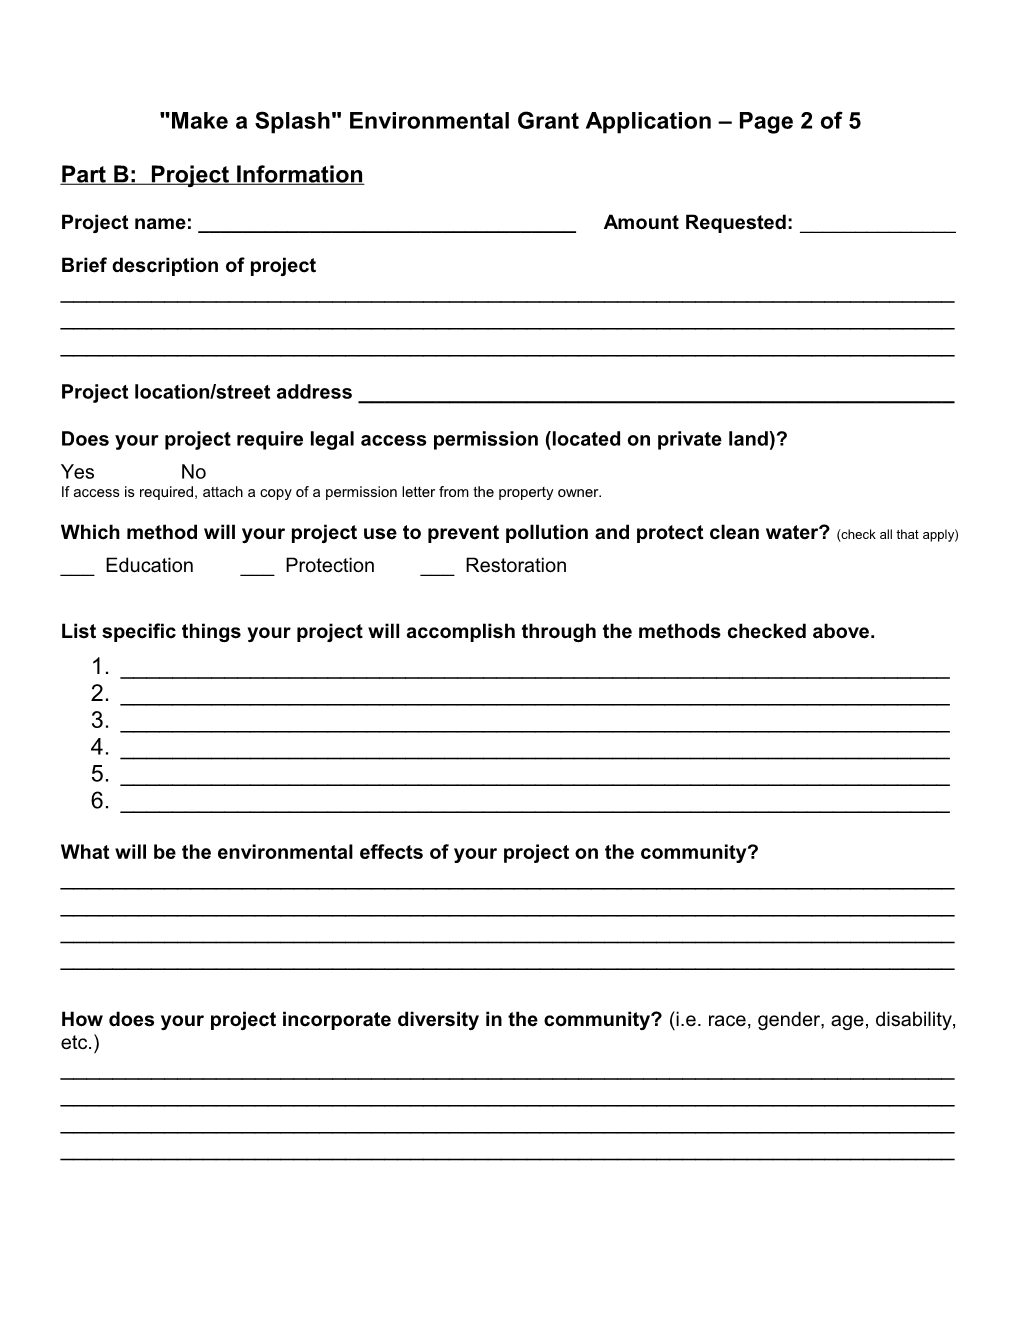 A Splash Environmental Grant Application (Page 1 of 5)